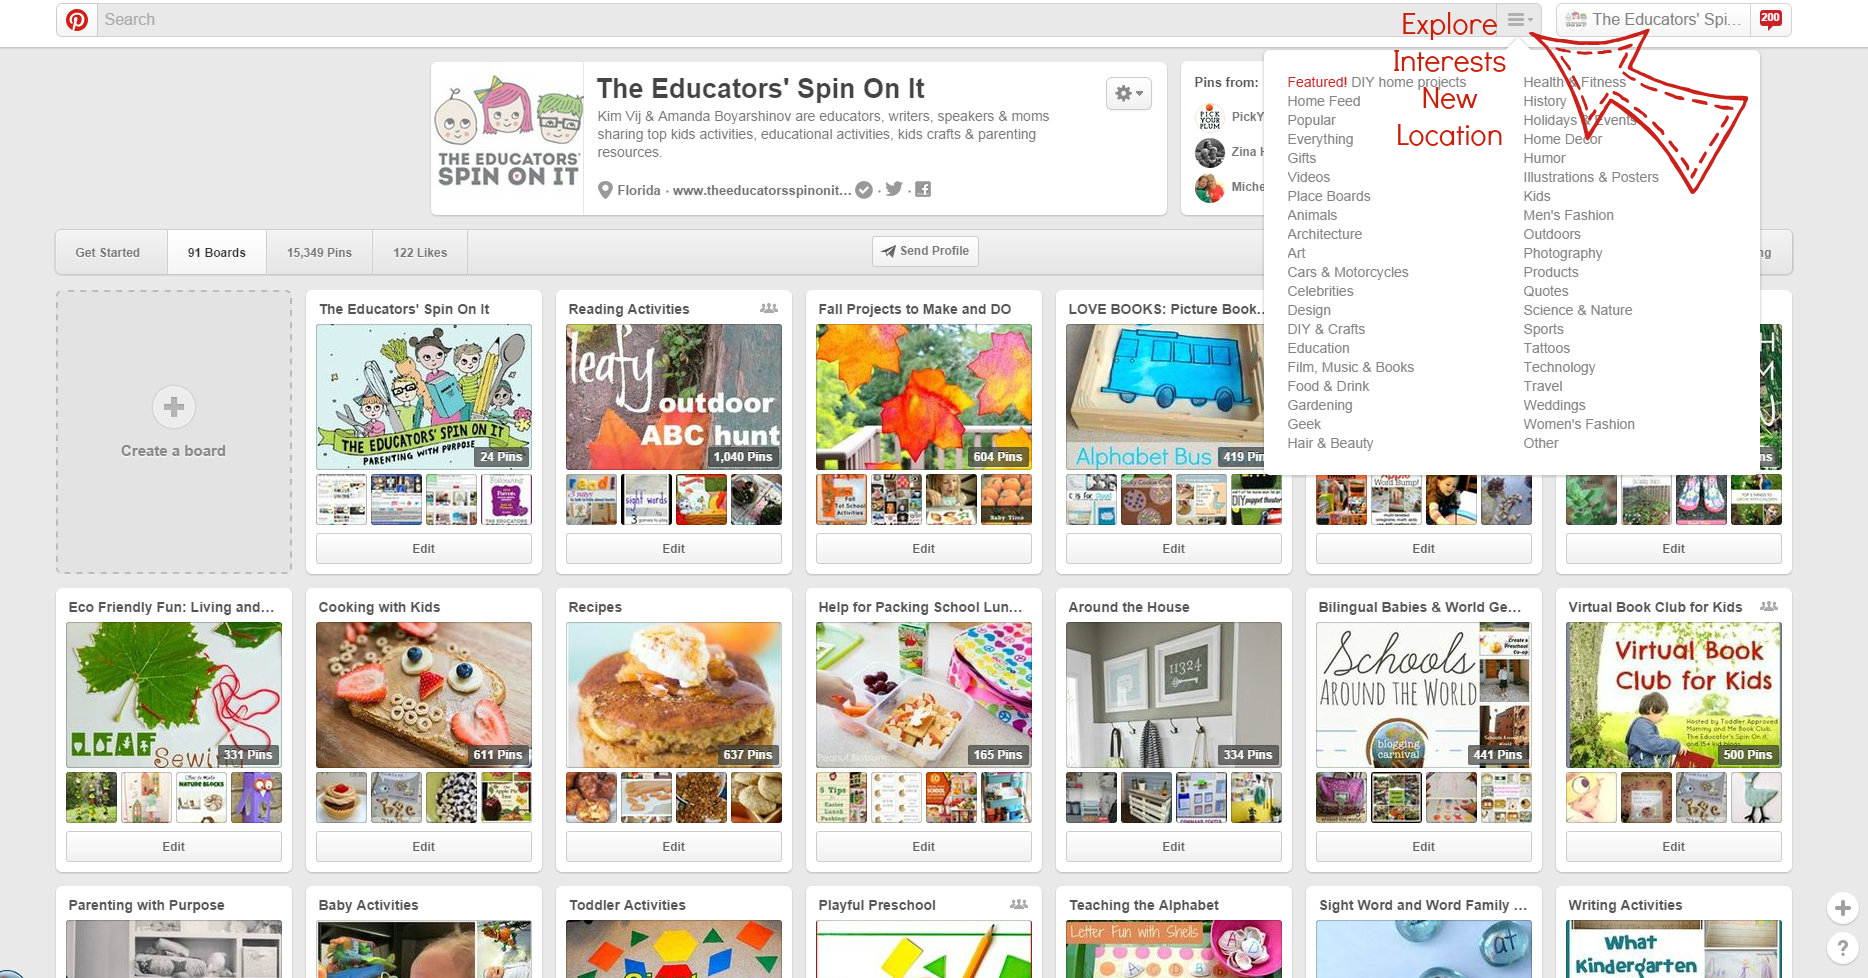 Explore Interest option on Pinterest new location 